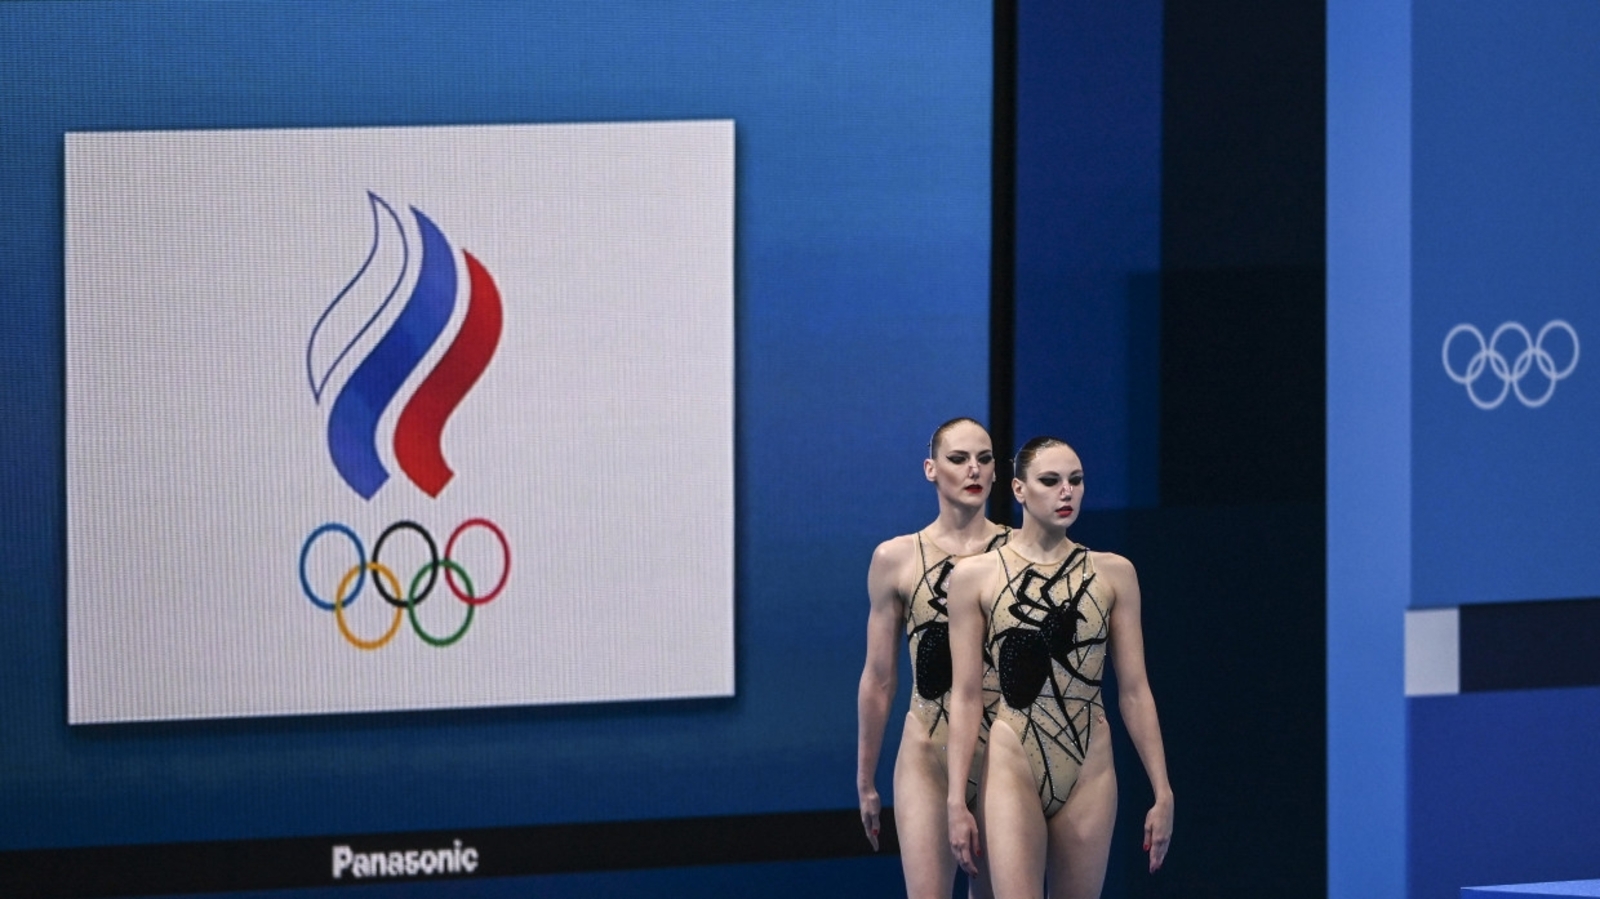 Президент России поздравил синхронисток Ромашину и Колесниченко с победой на Олимпиаде в Токио